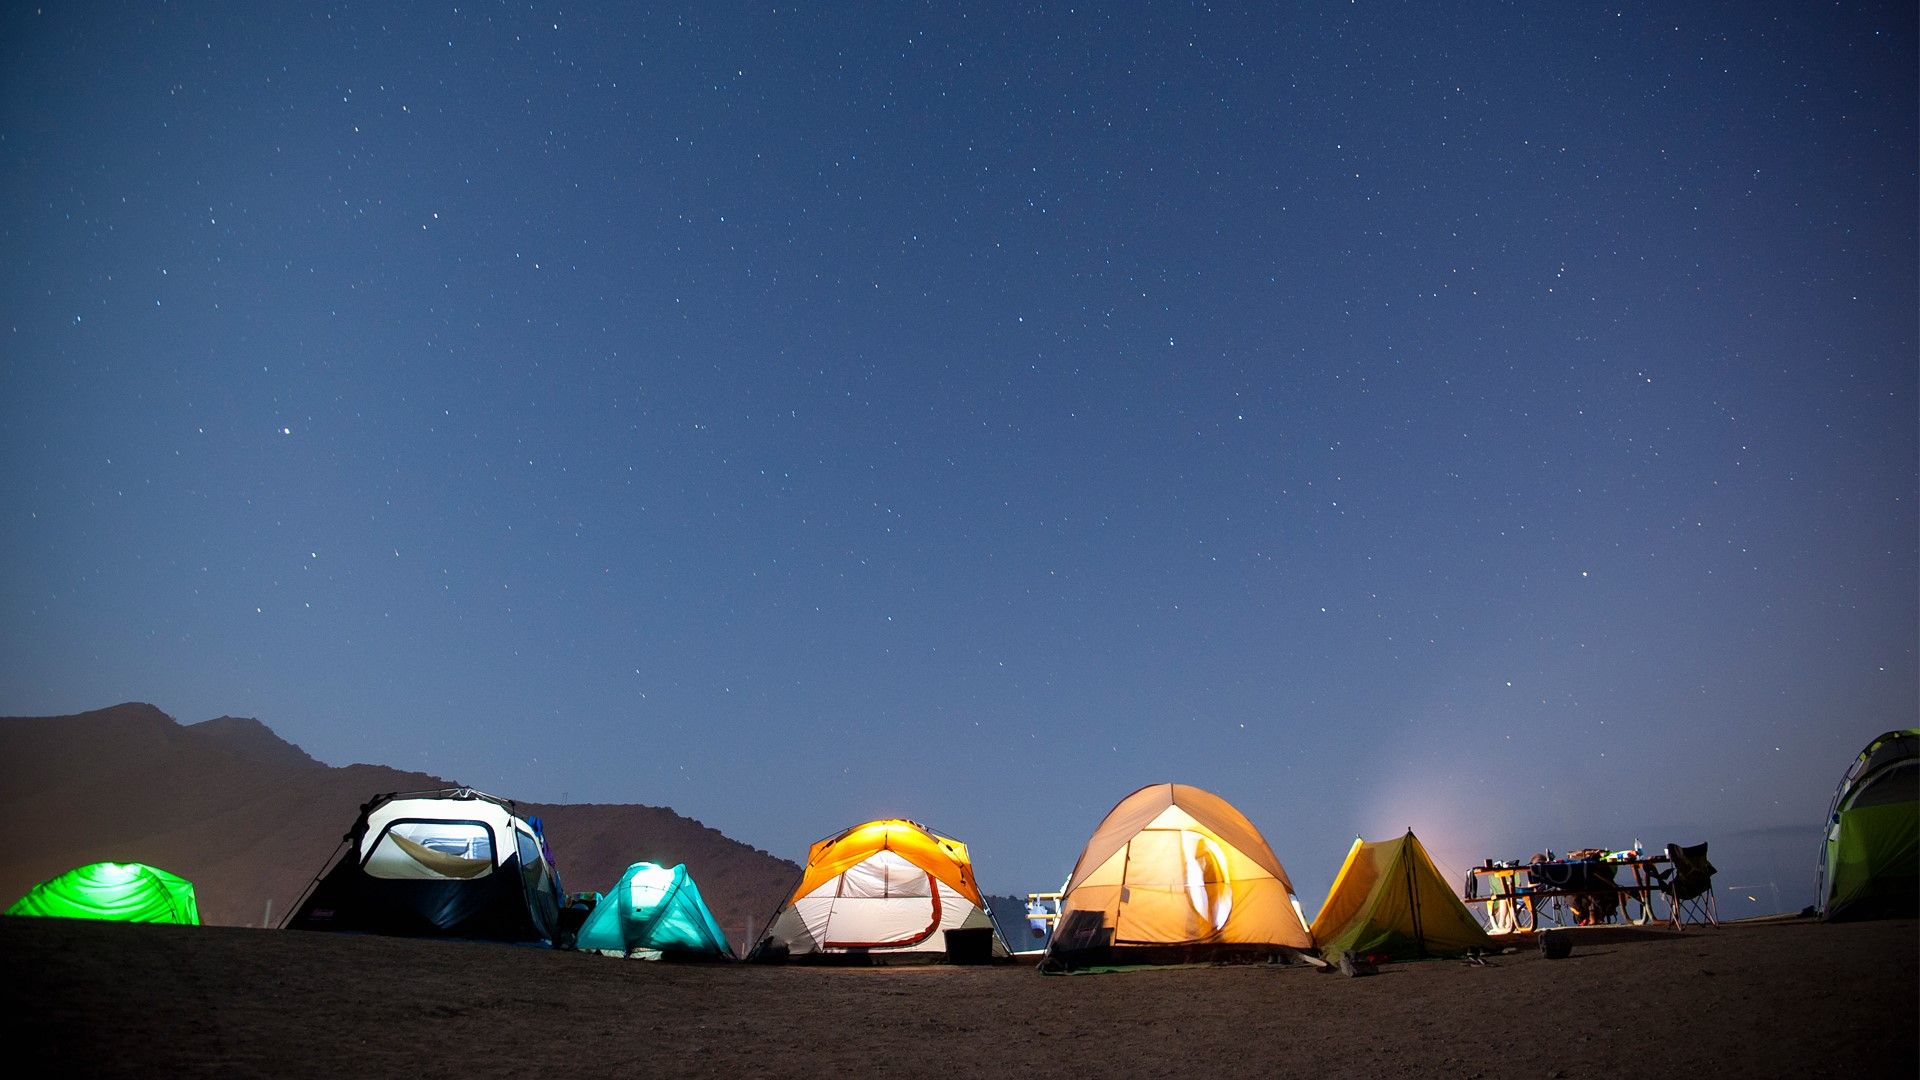 Night camp. Палатка виндовс 10. Кемпинг. Палатка в горах. Палатка на фоне звездного неба.